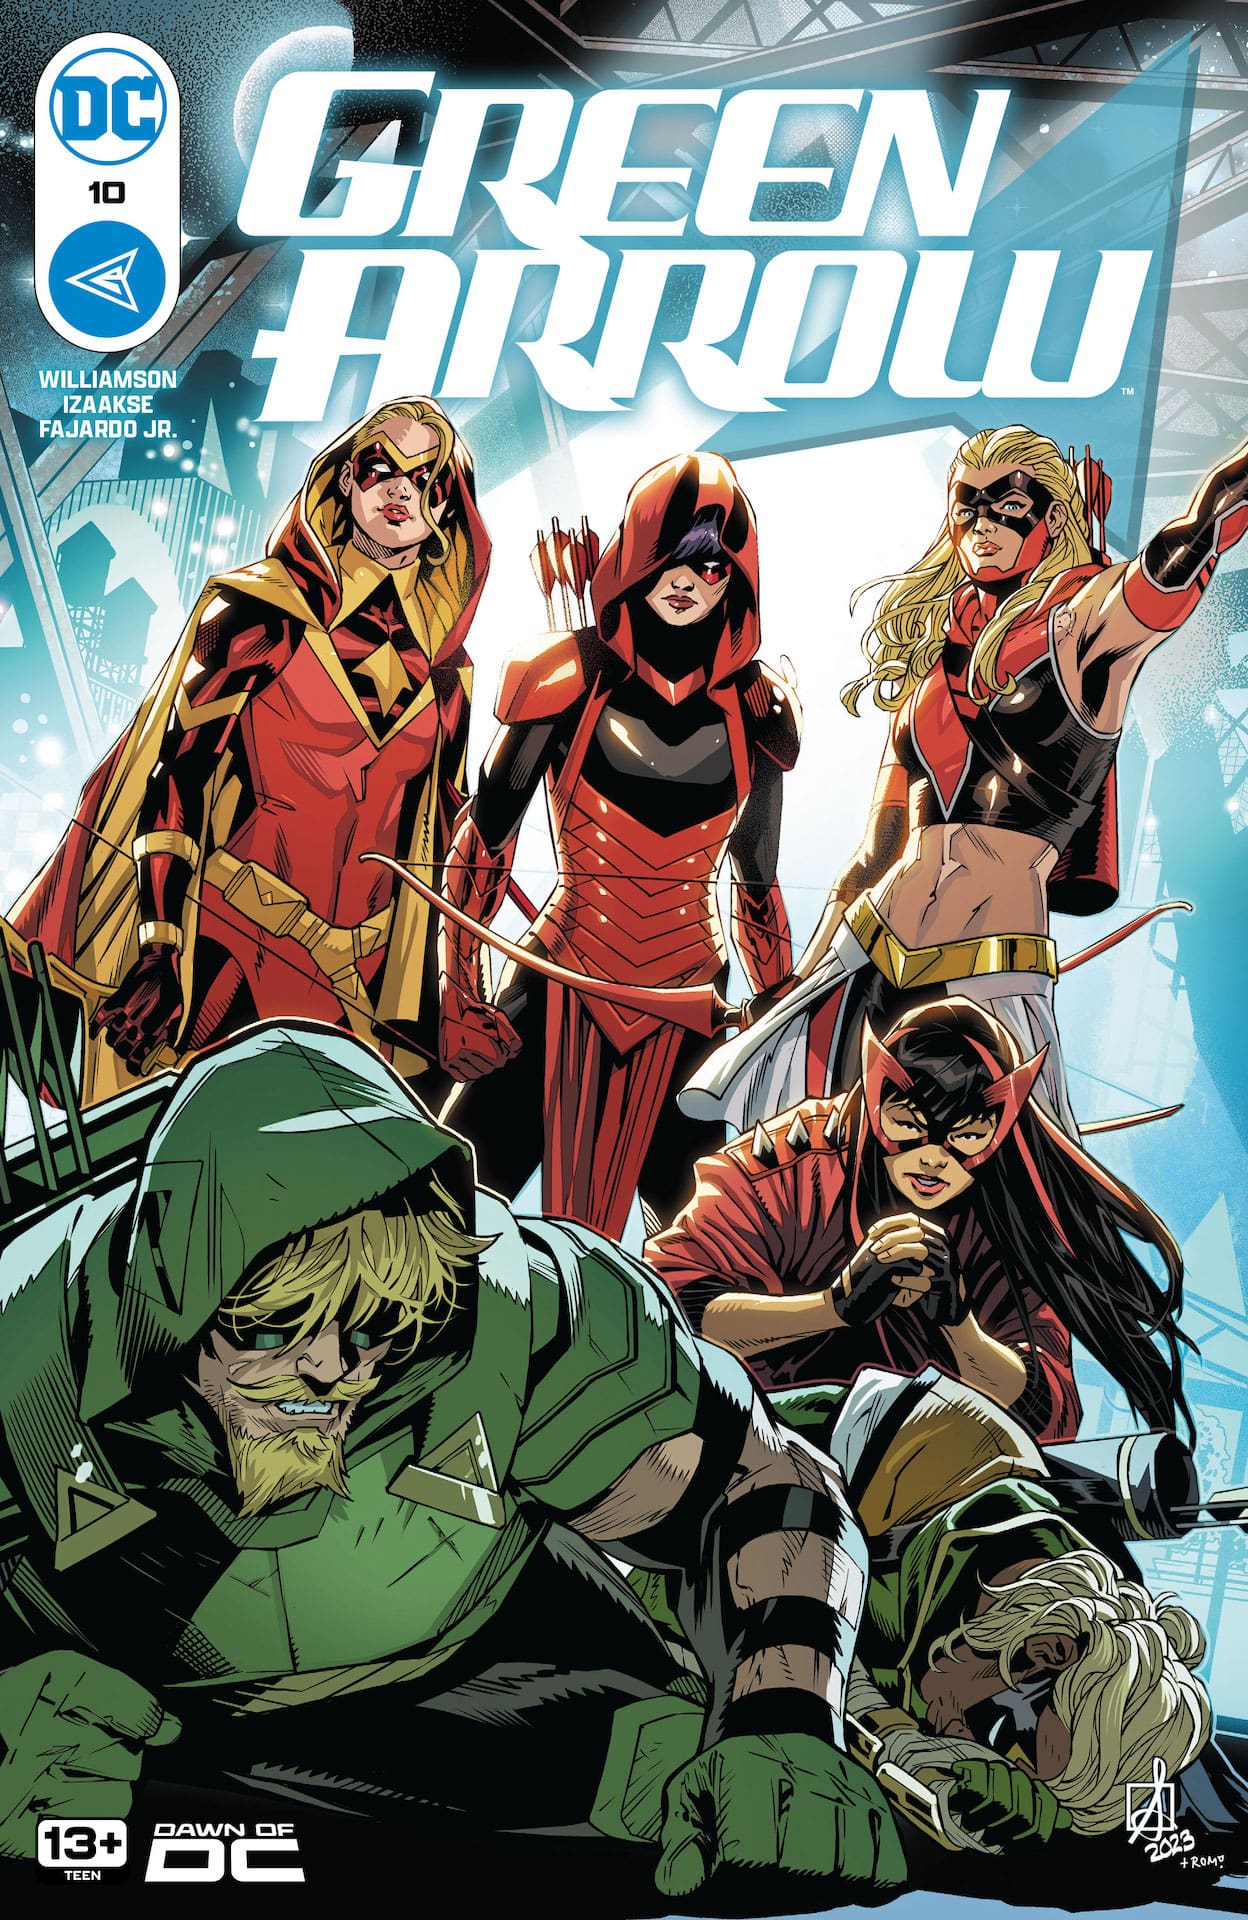 DC Preview: Green Arrow #10